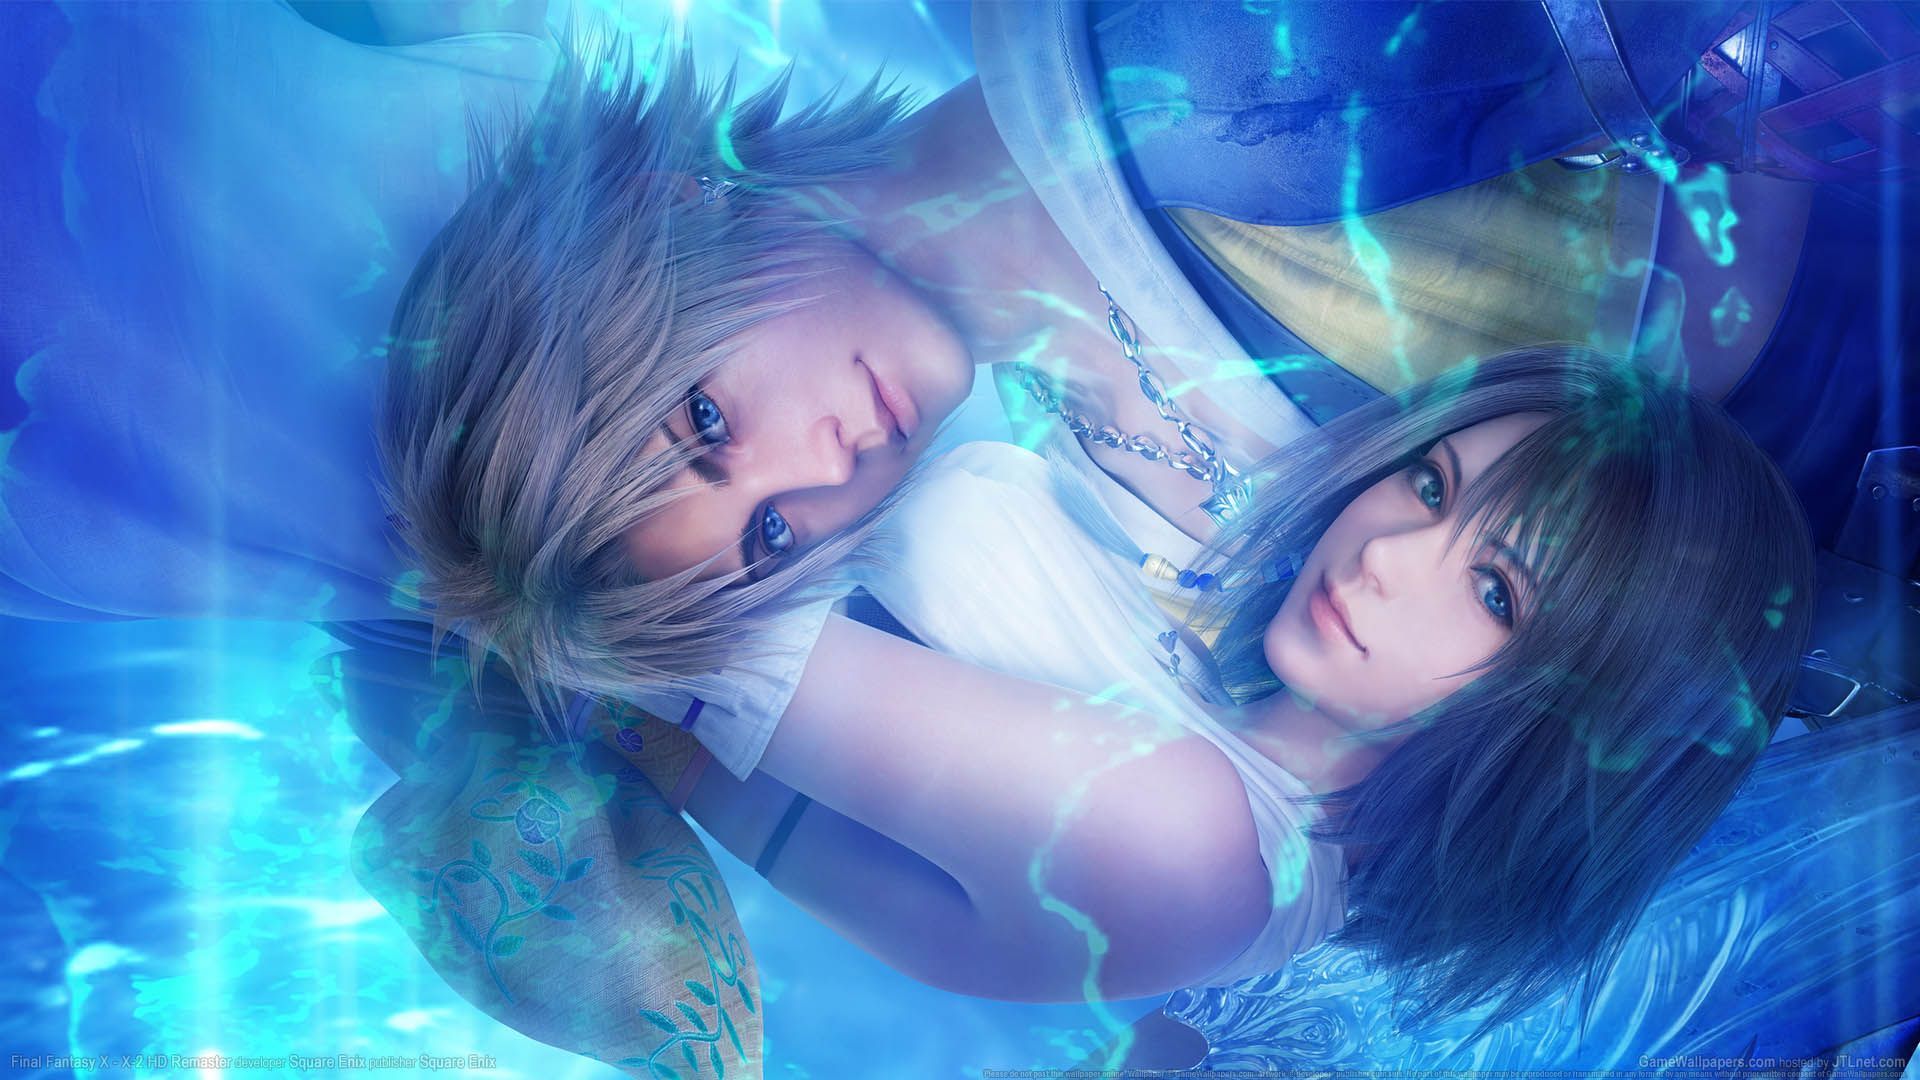 Final Fantasy X 2 HD Wallpaper Or Desktop Background. Final